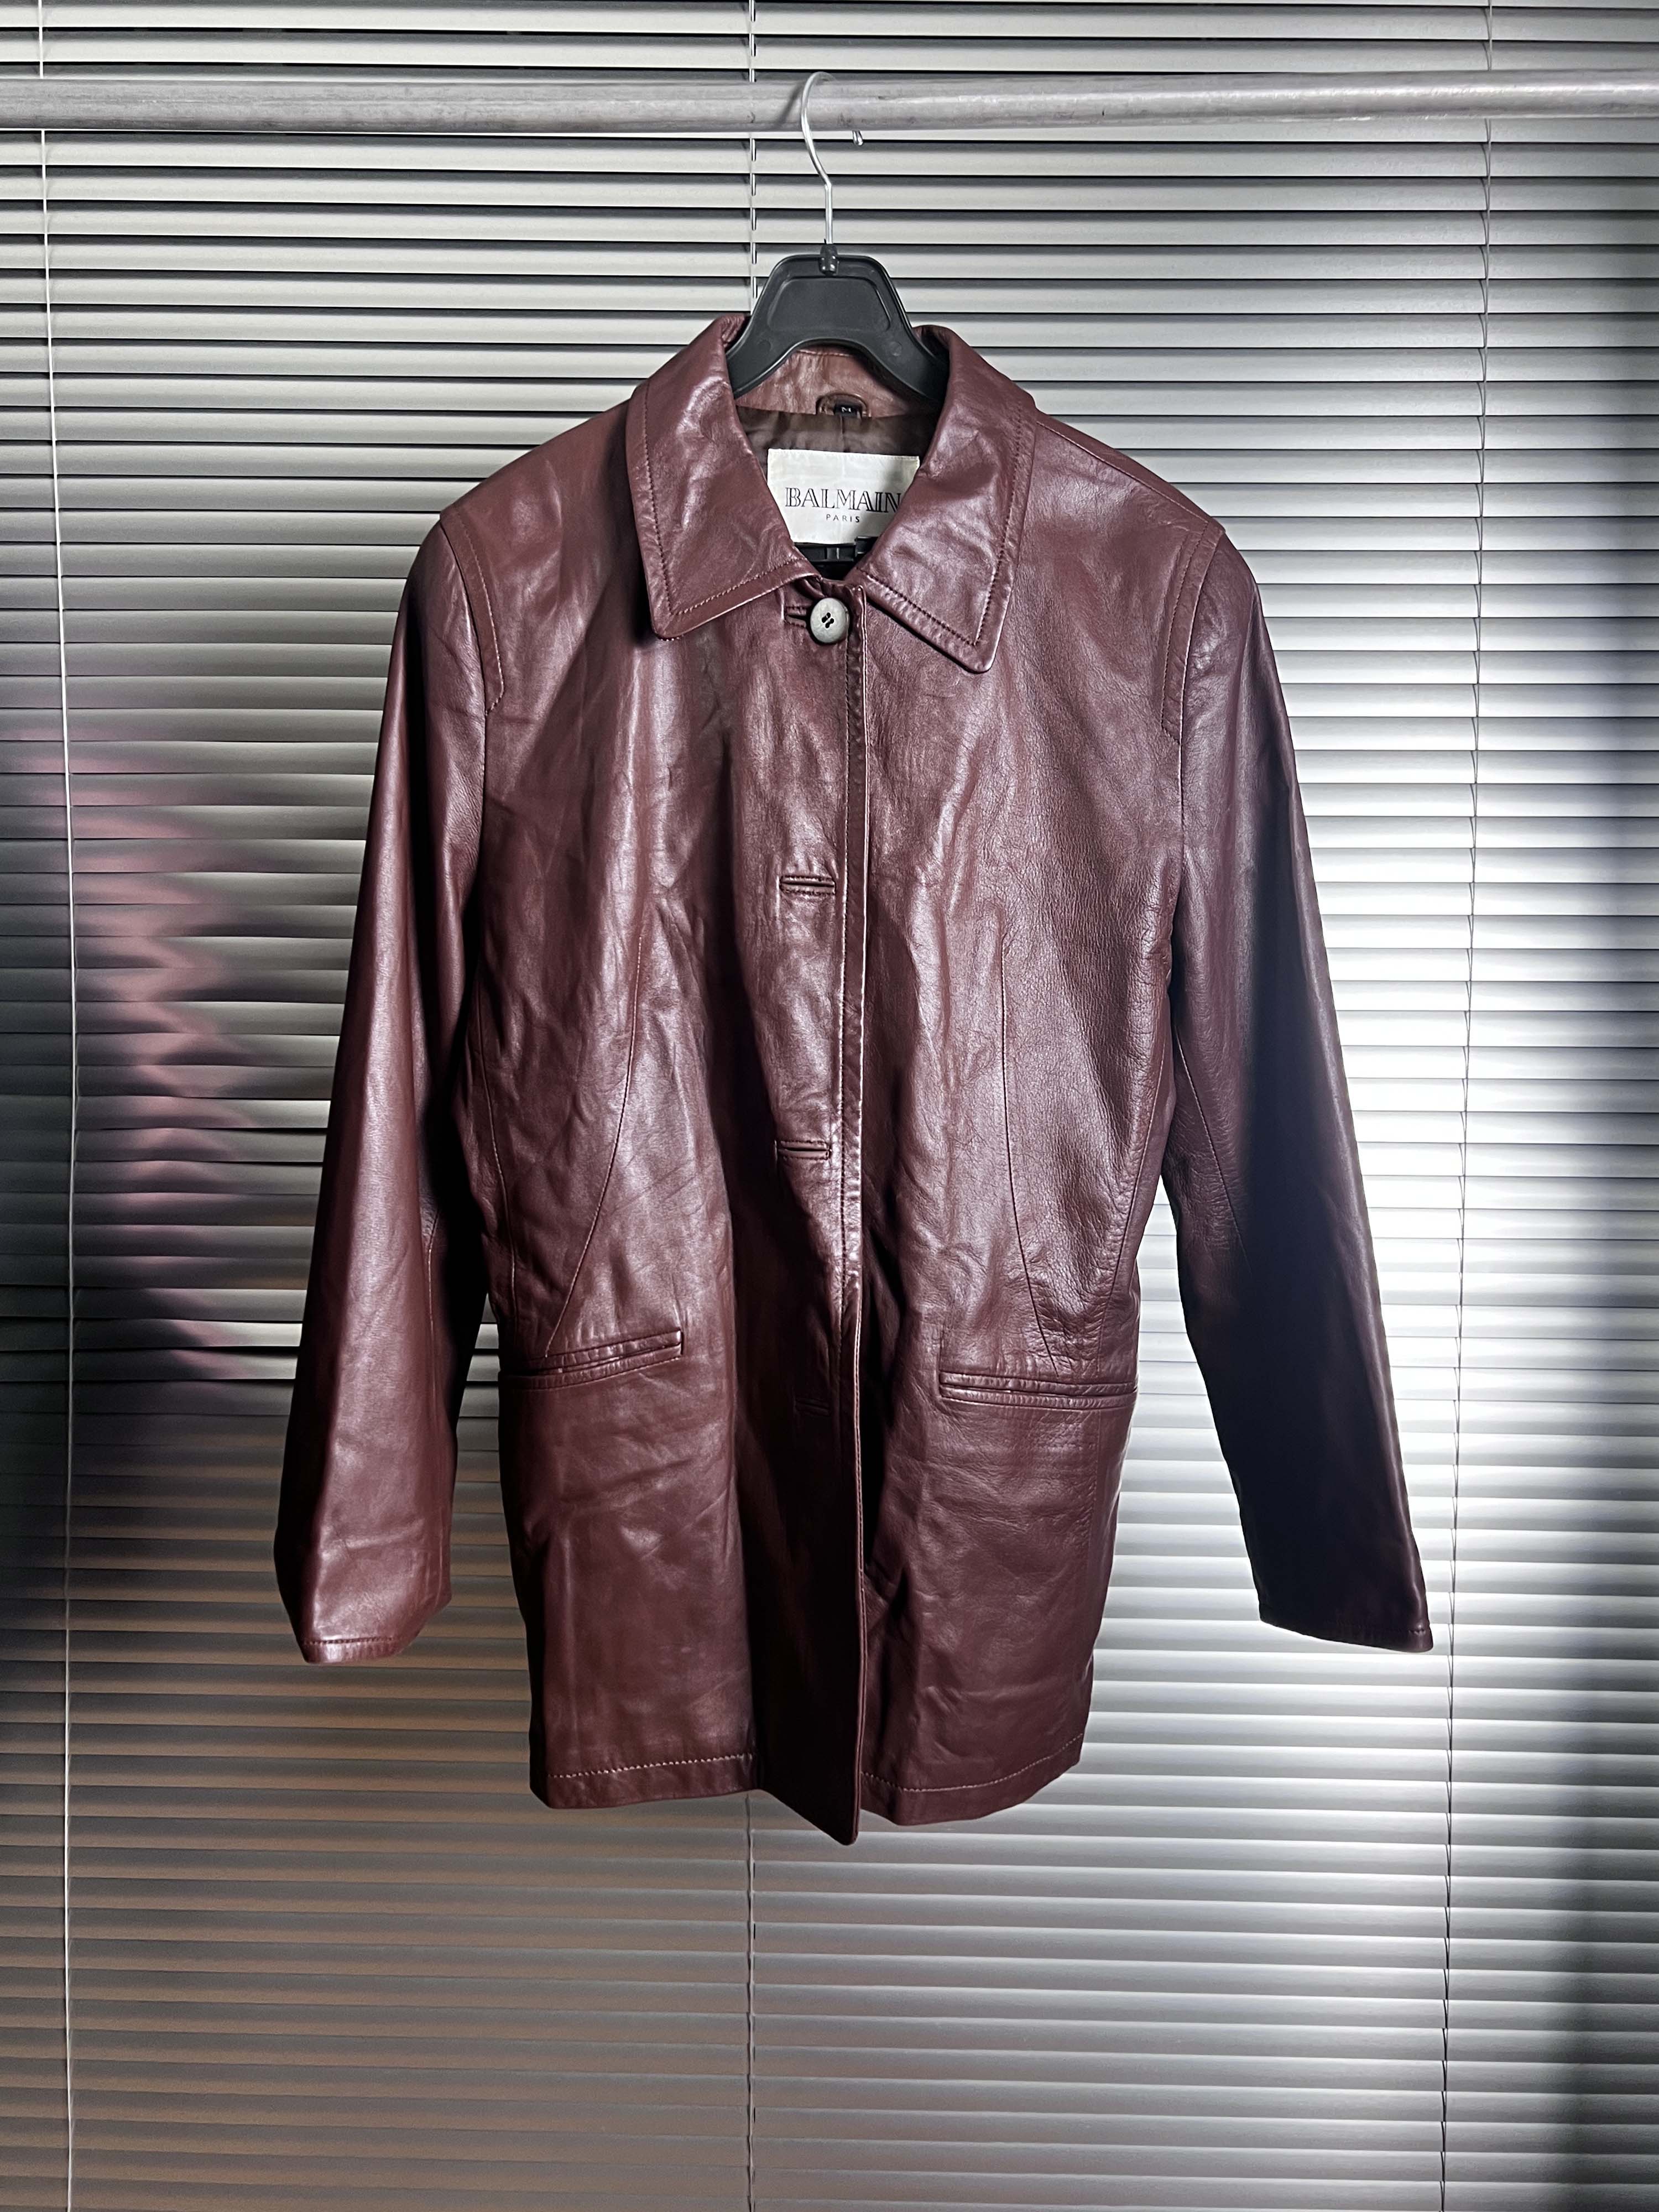 BALMAIN leather jacket